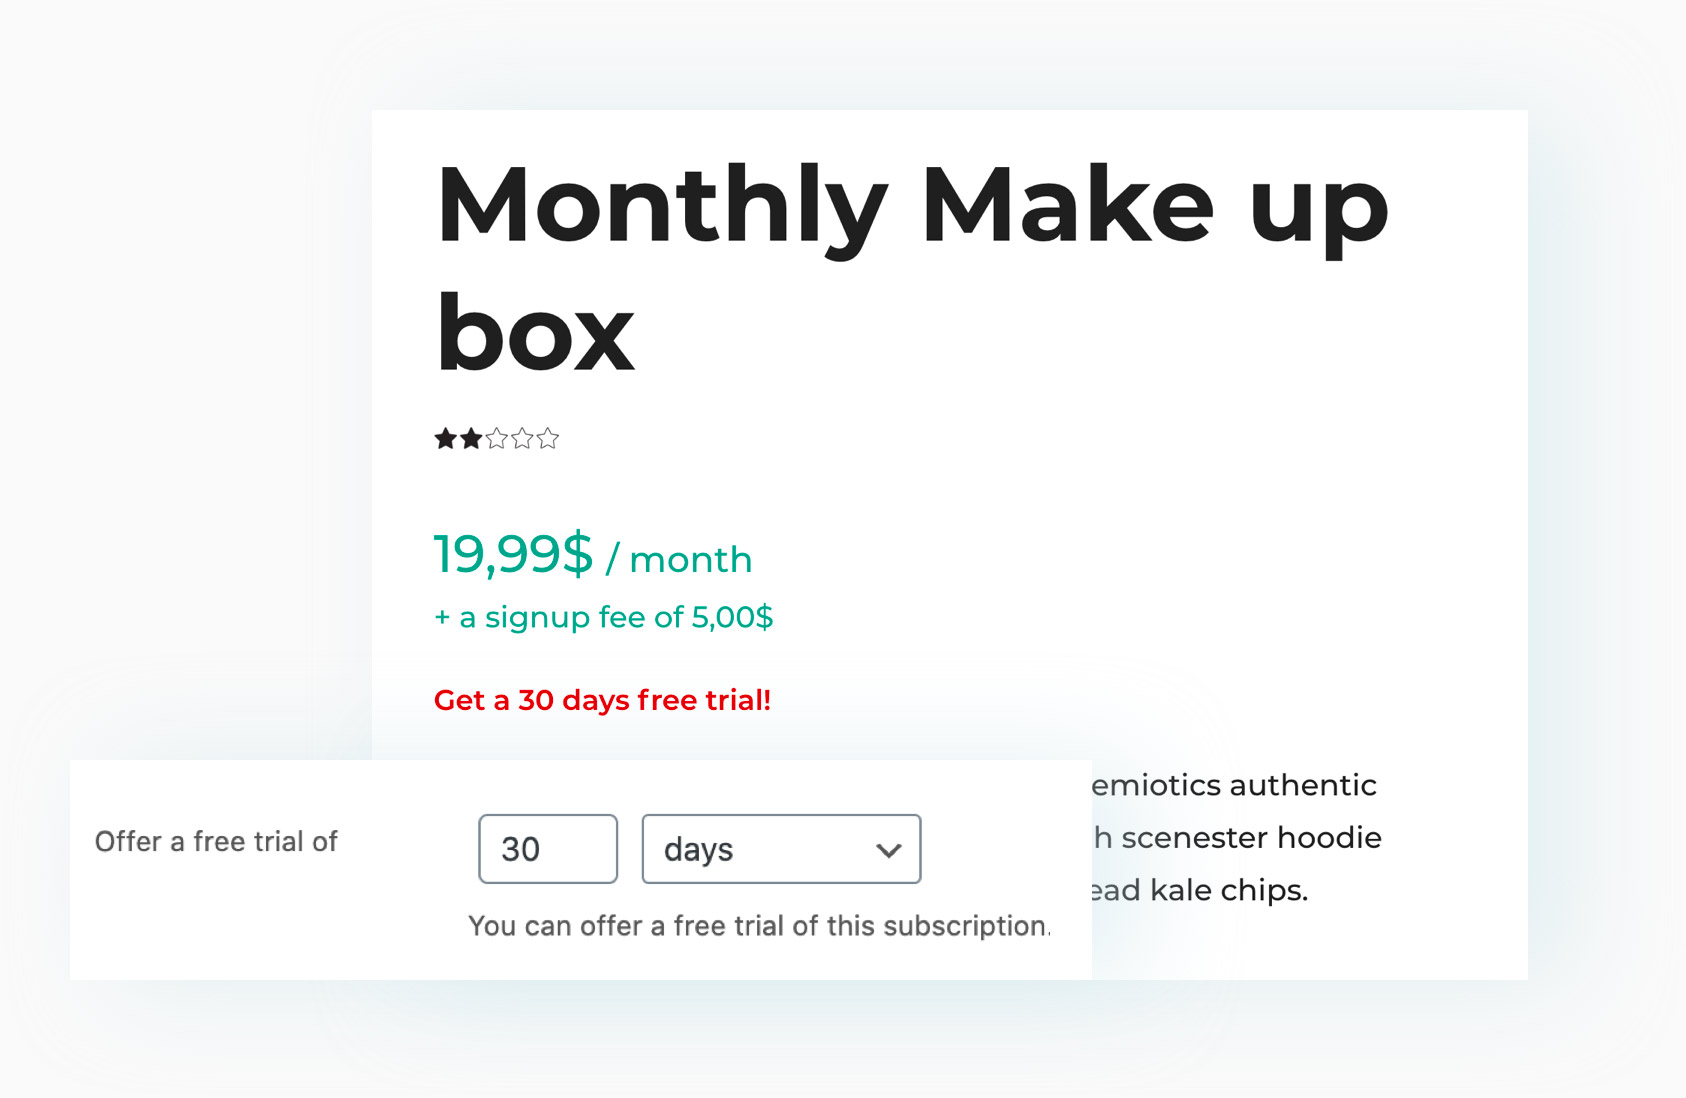 YITH WooCommerce Subscription Premium插件功能-设置免费试用期以创建客户列表并推动他们稍后购买